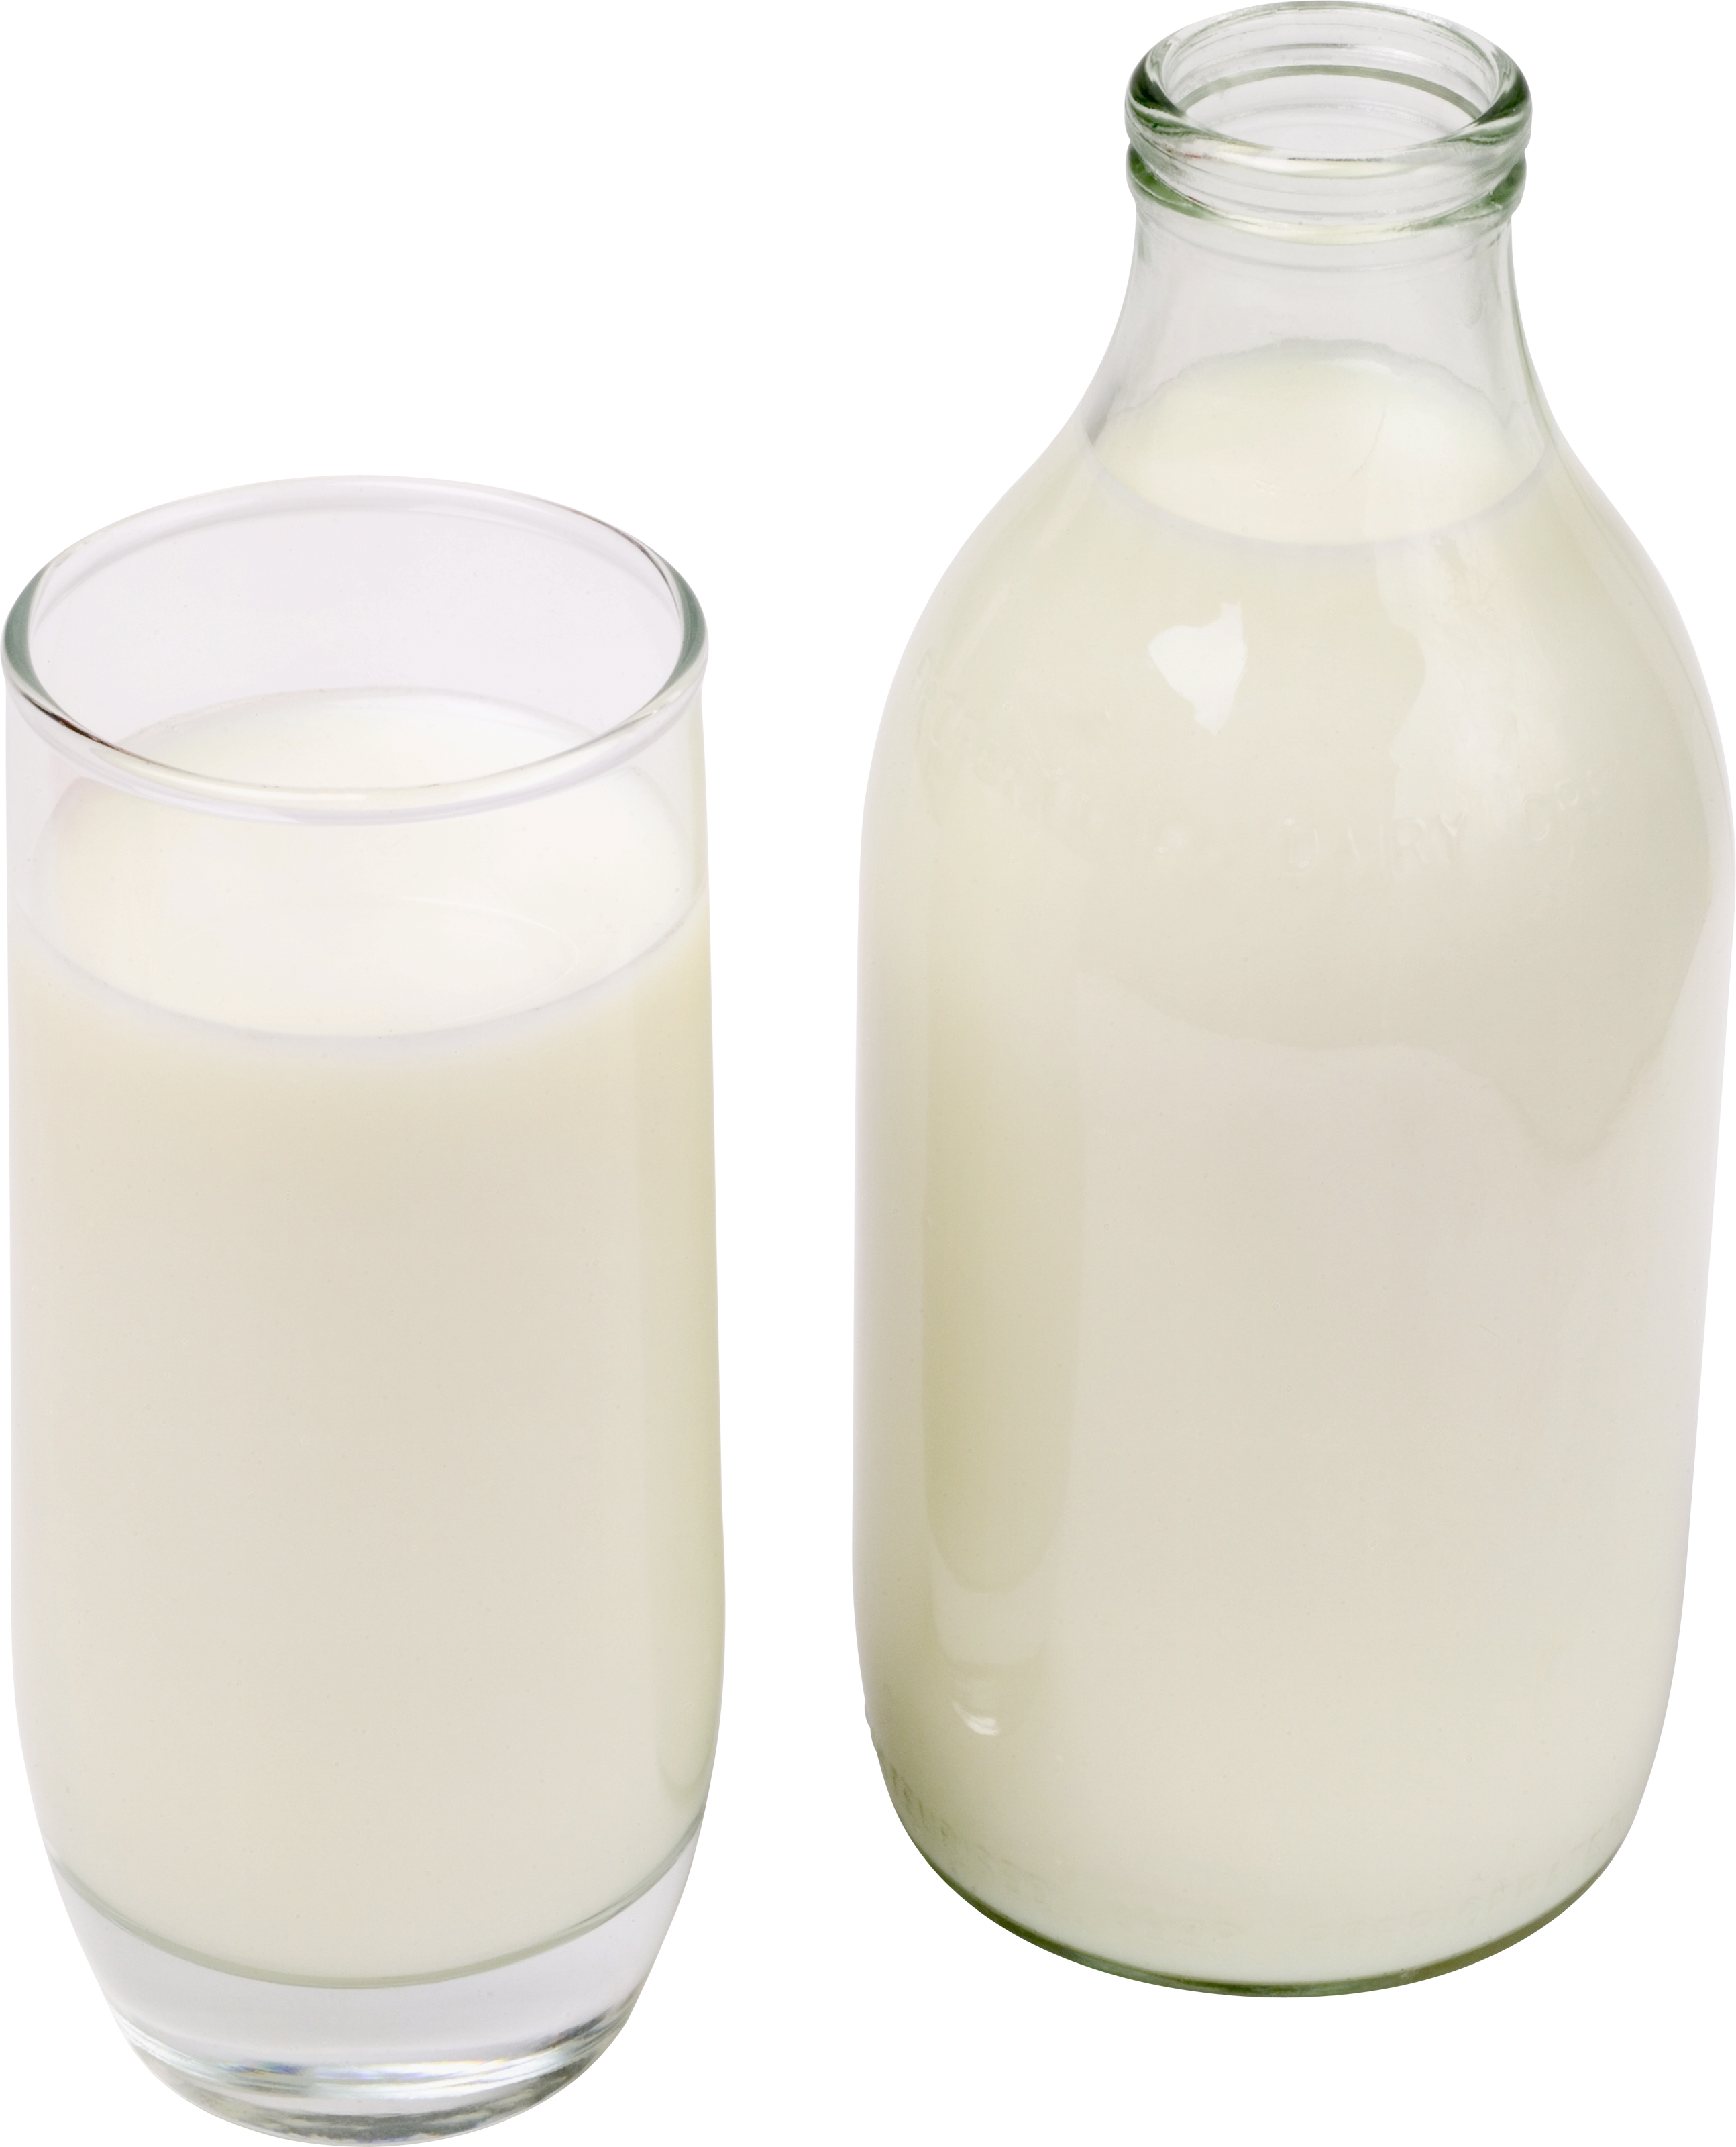 PNG Milk Bottle - 78752